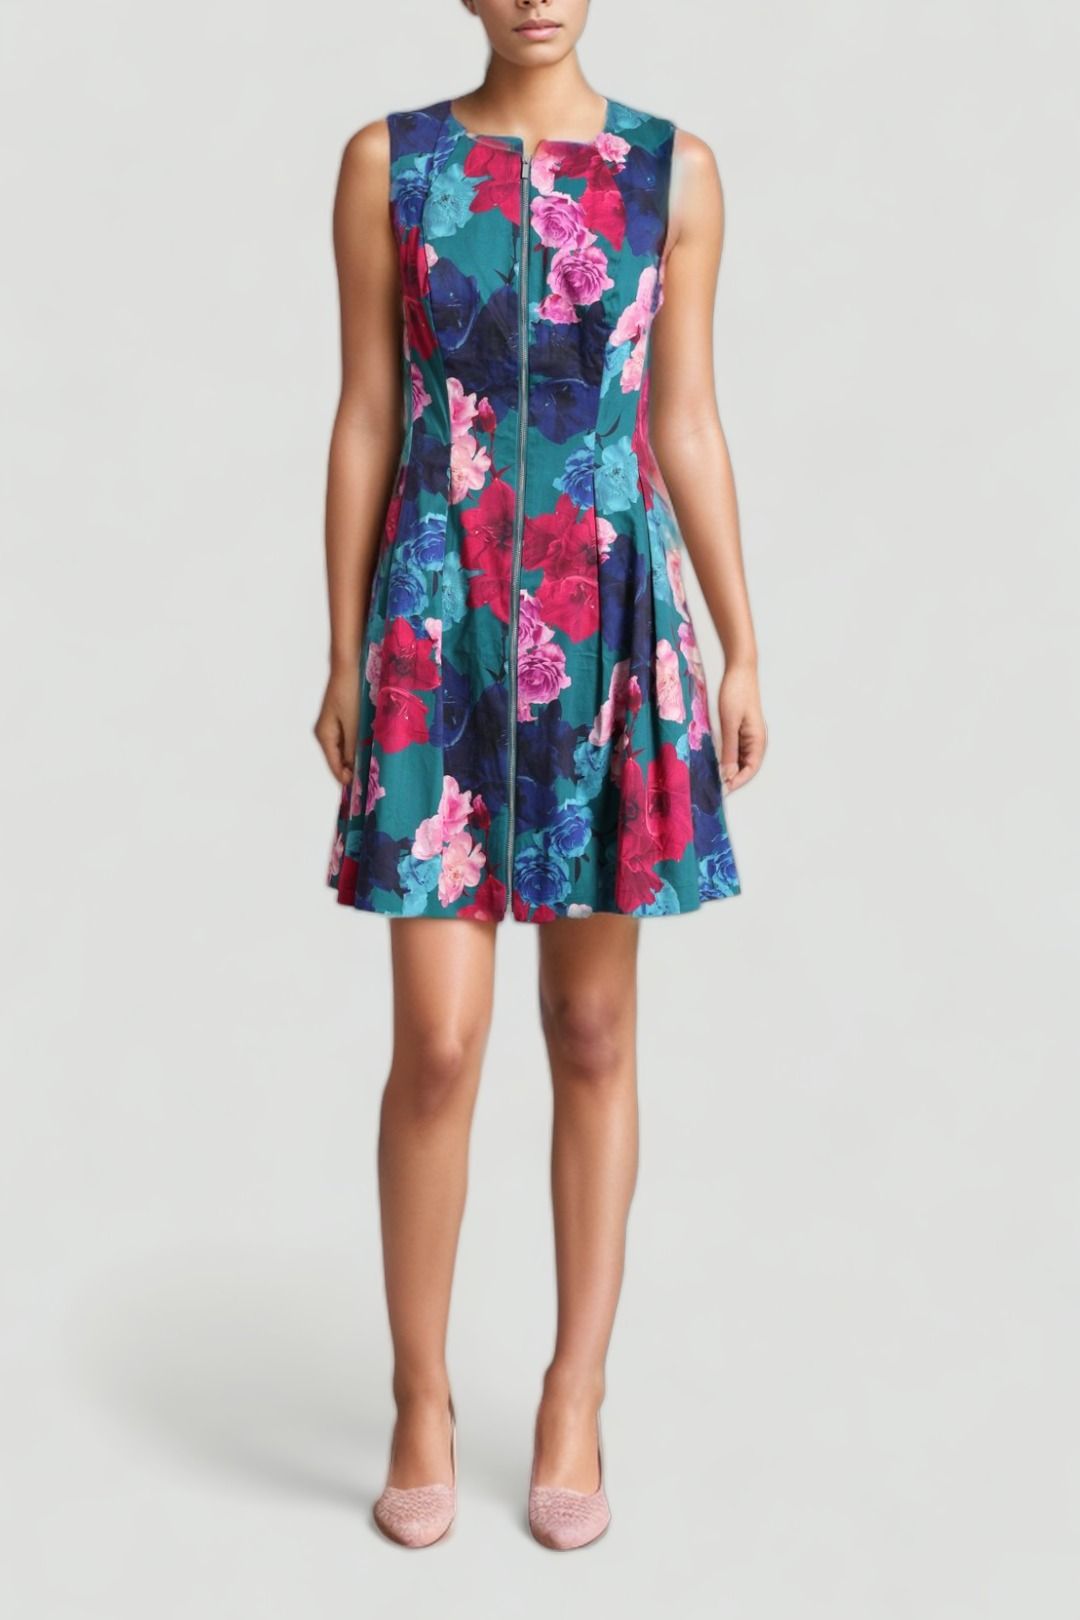 Portmans - Floral Front Zip Fit and Flare Dress